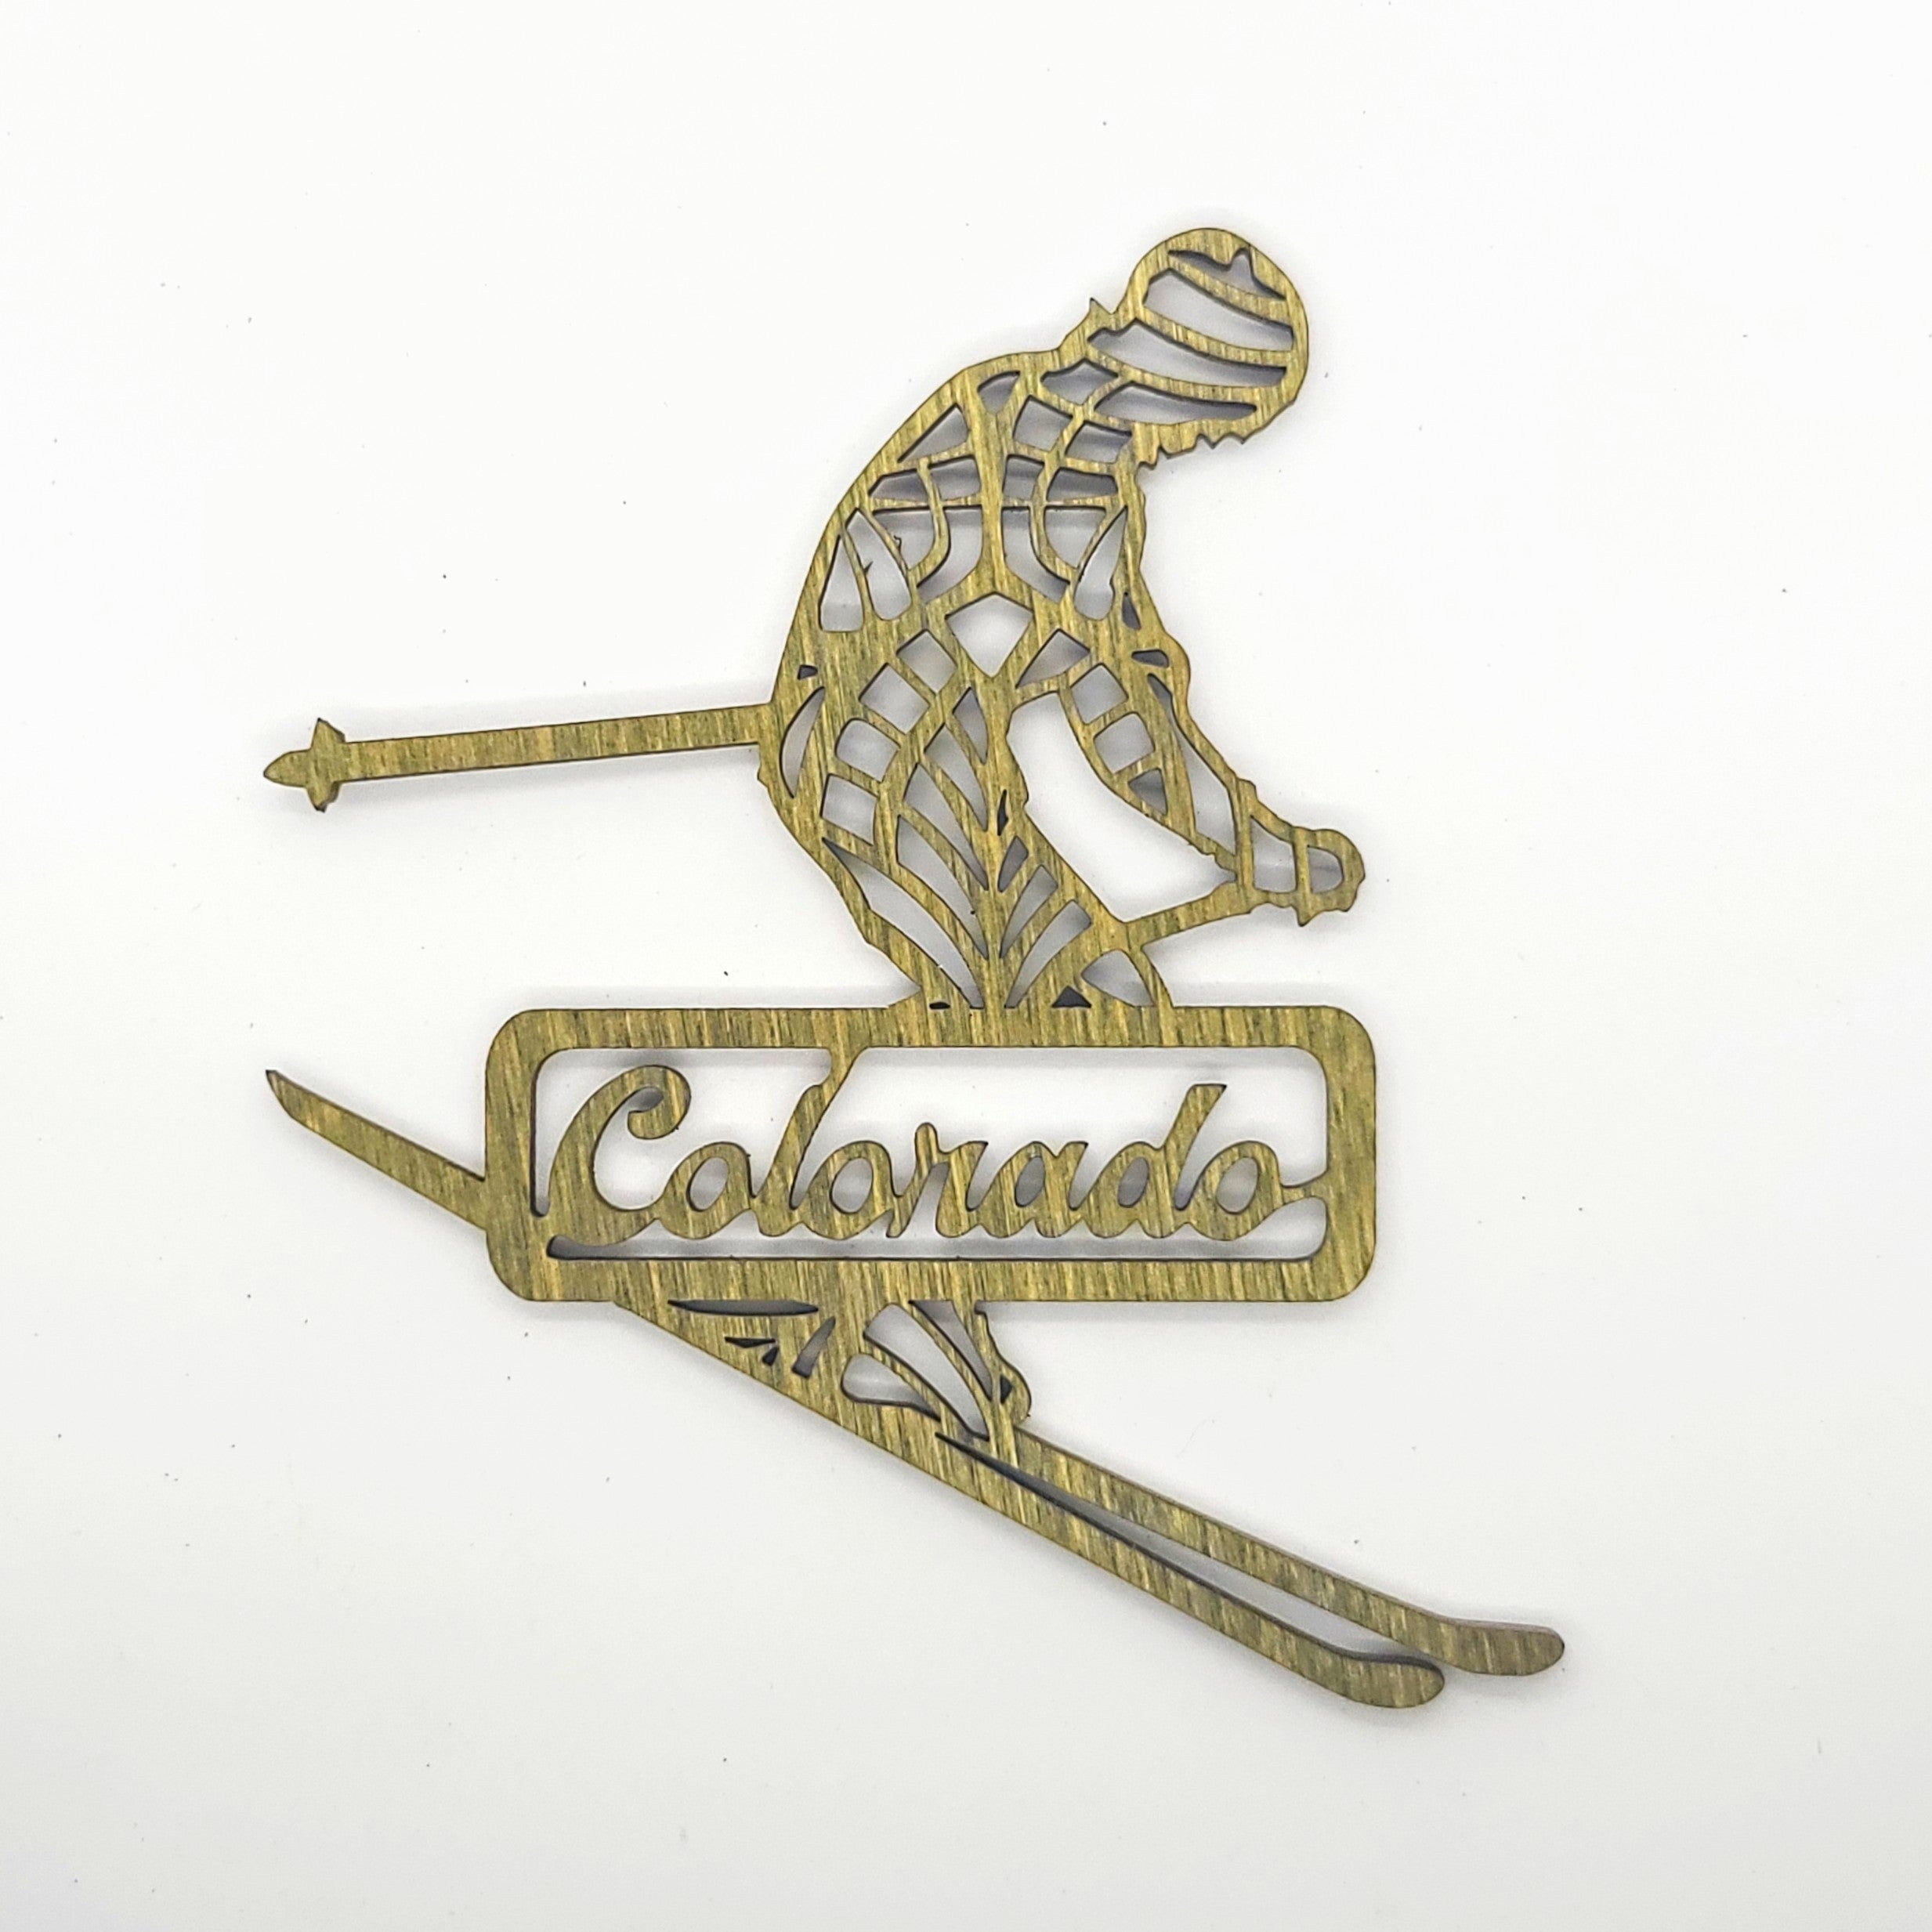 Colorado Skier Ornament